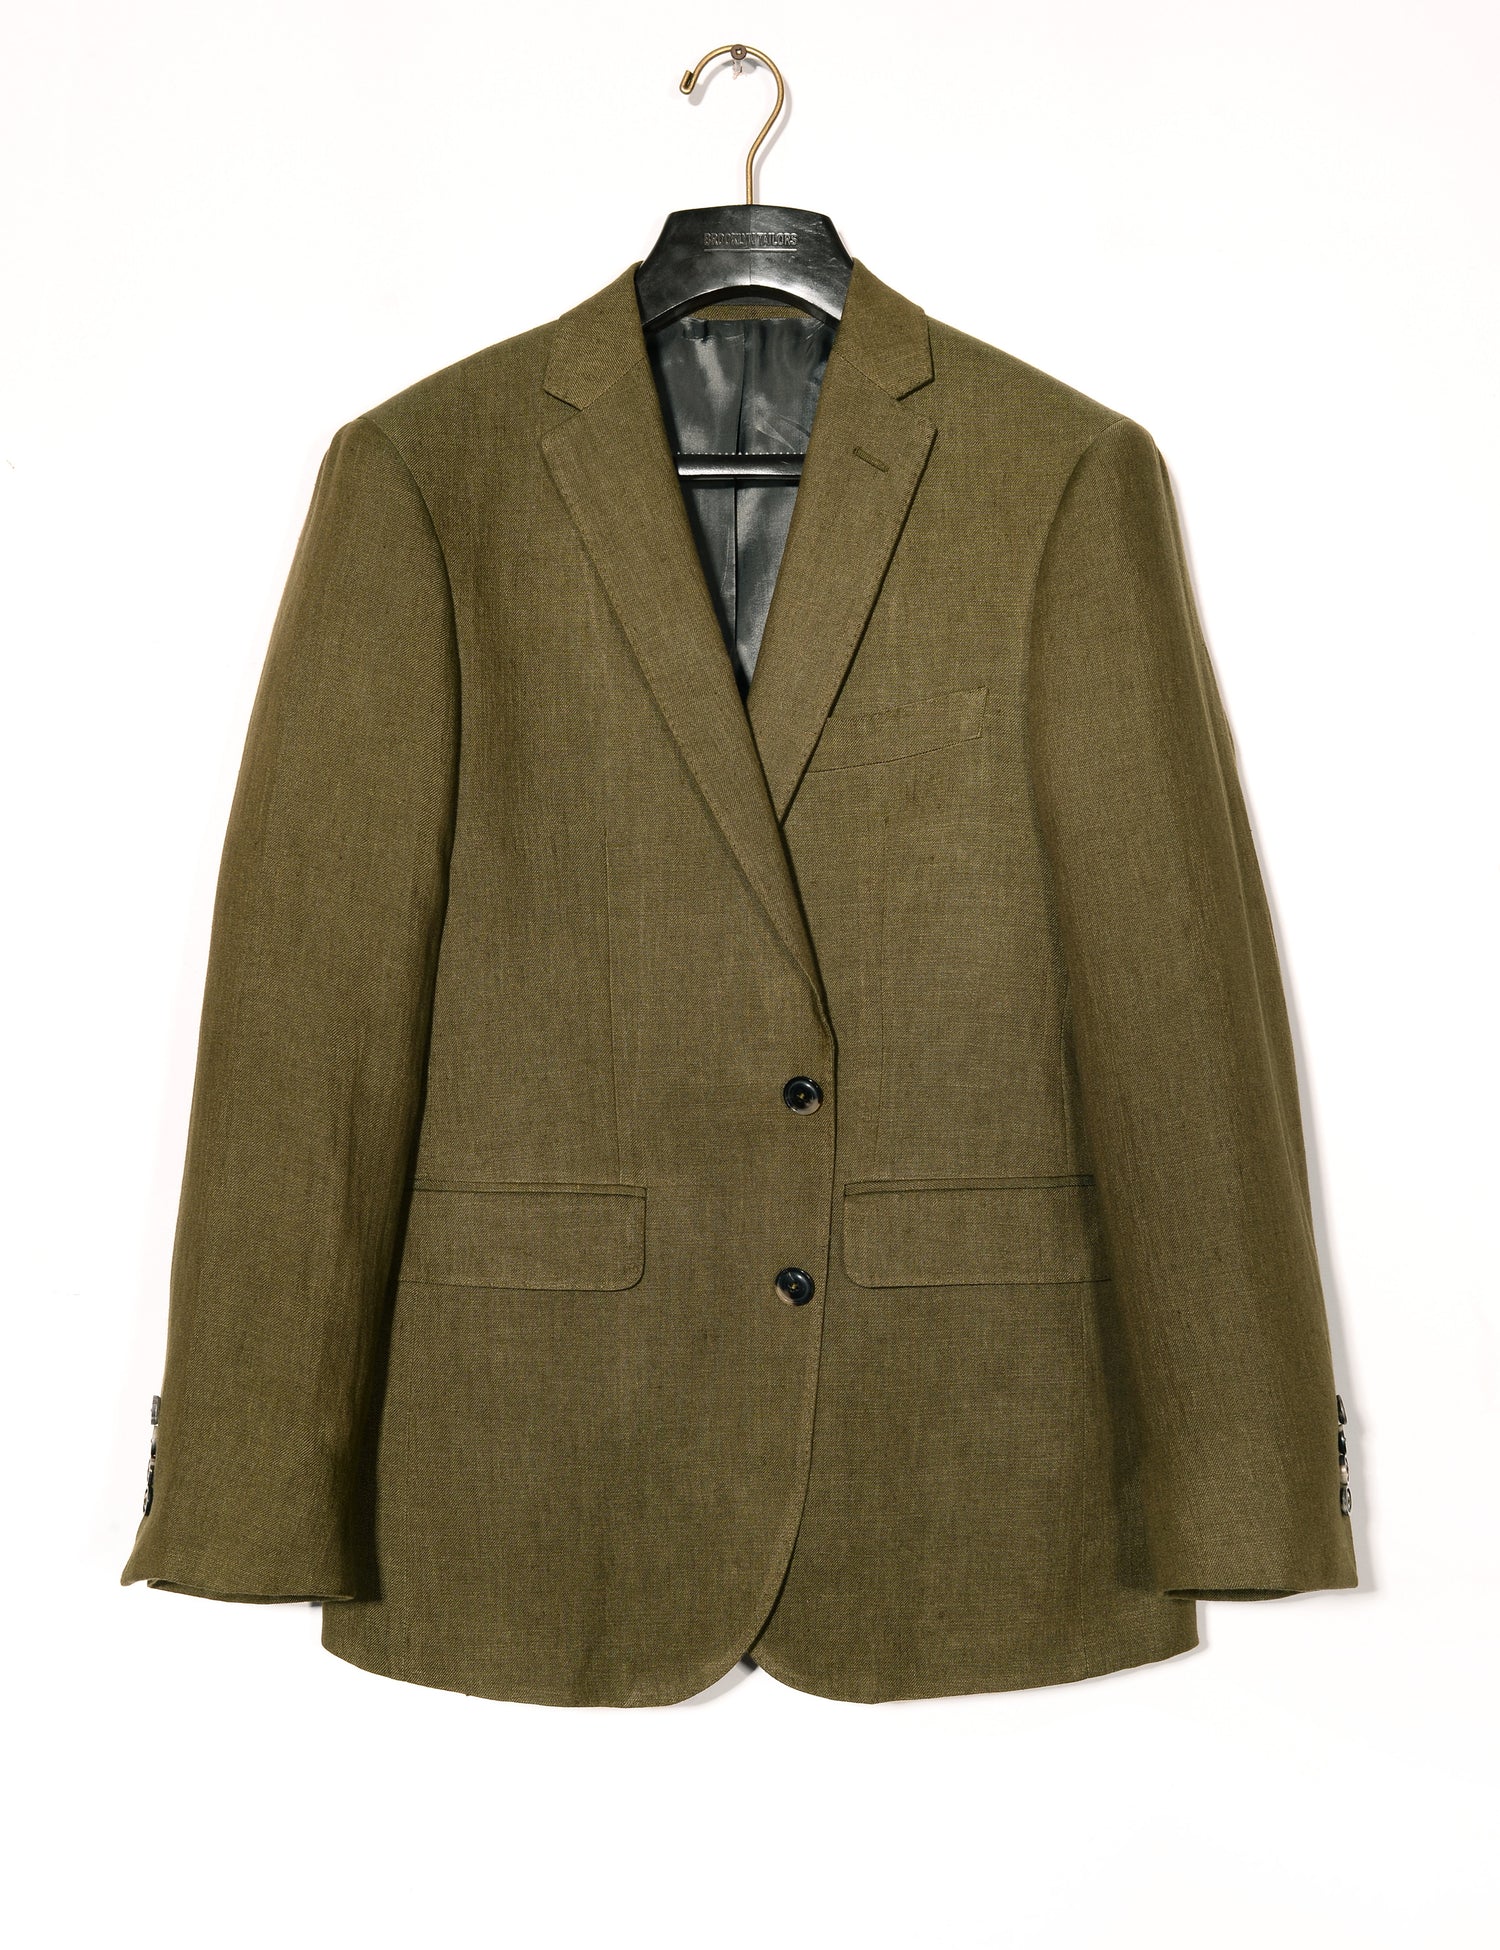 Brooklyn Tailors BKT50 Tailored Jacket in Linen Twill - Moss full length shot on hanger